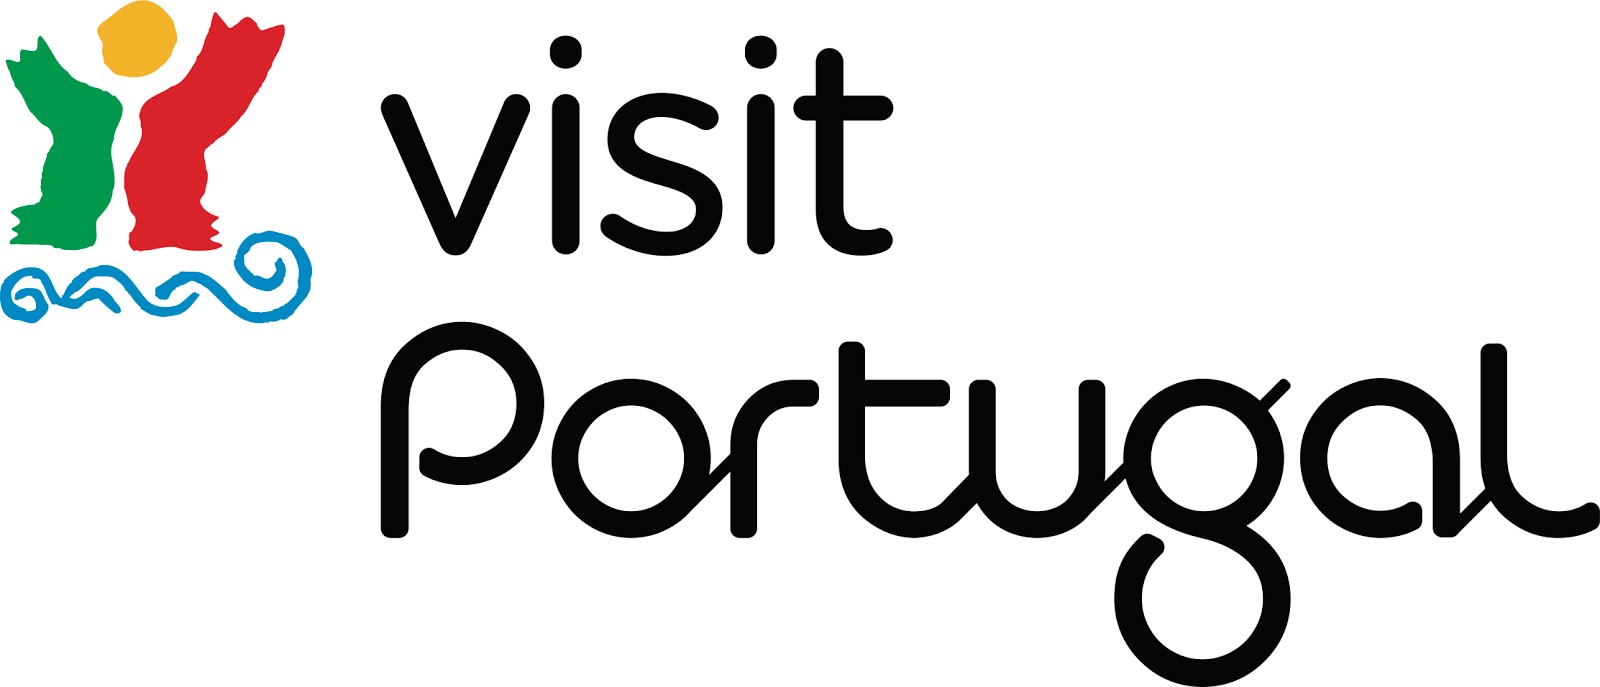 Official Portuguese tourism agency